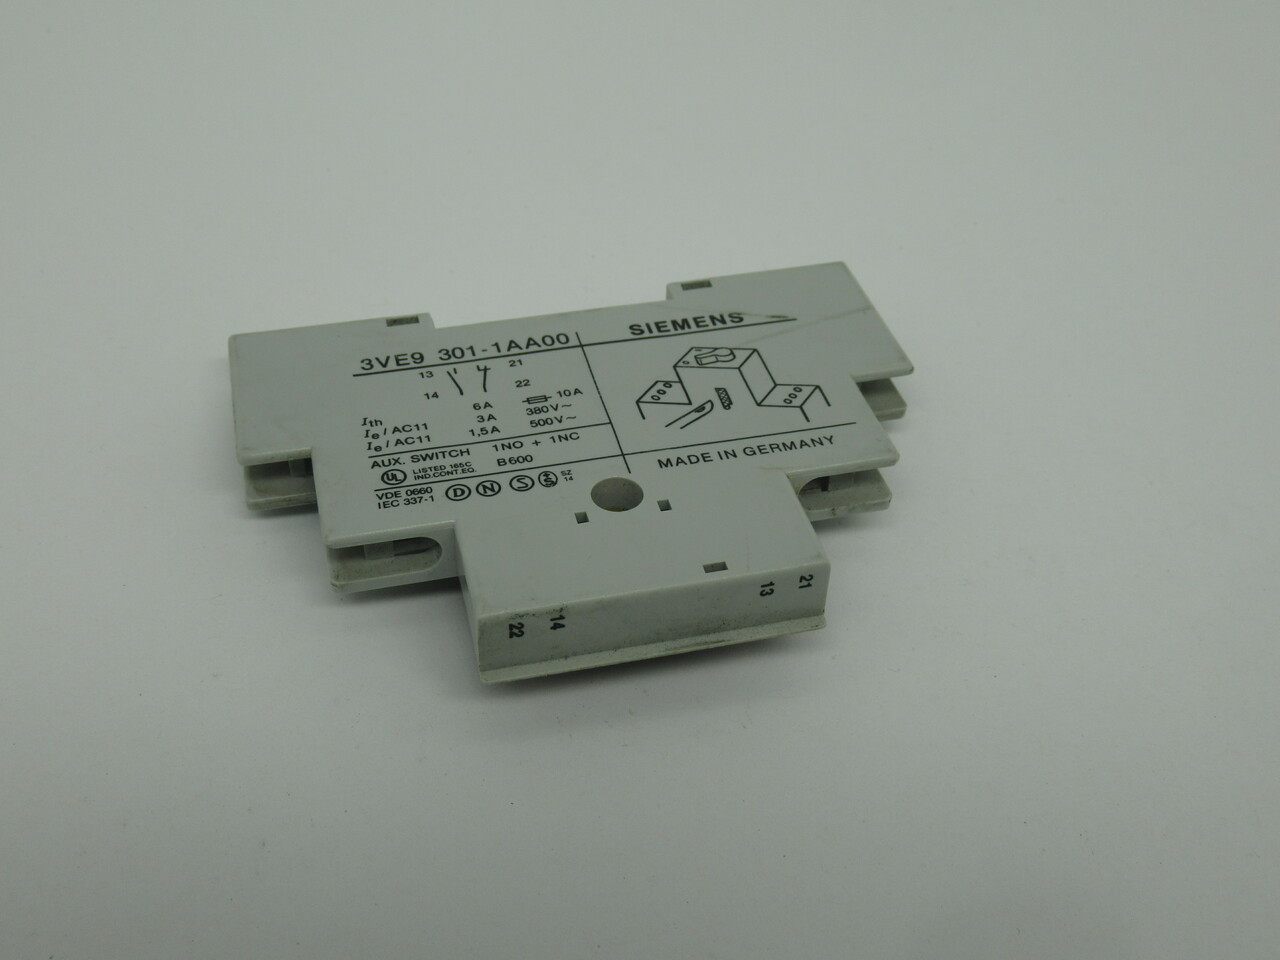 Siemens 3VE9301-1AA00 Auxiliary Contact 6Amp 500VAC USED